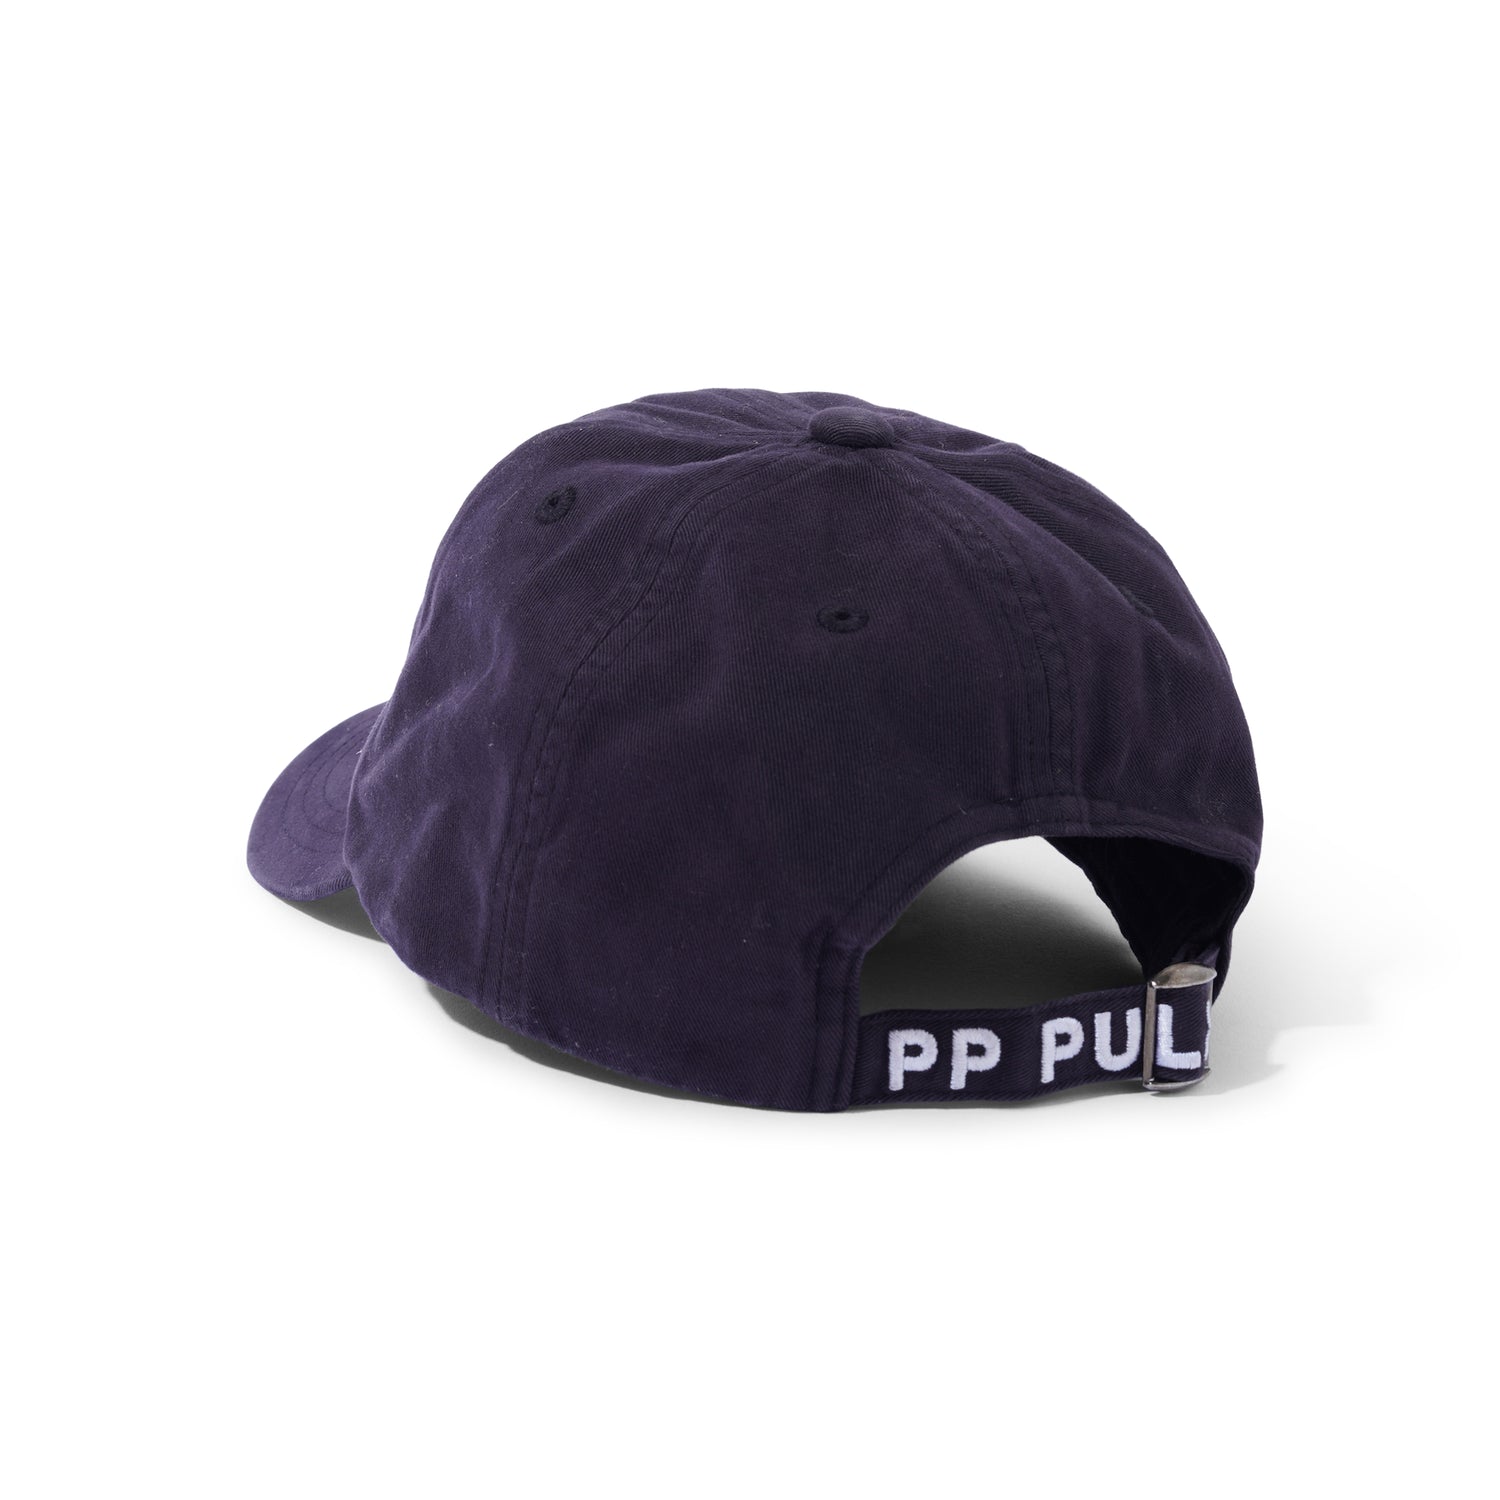 Push/Pull Hat, Black